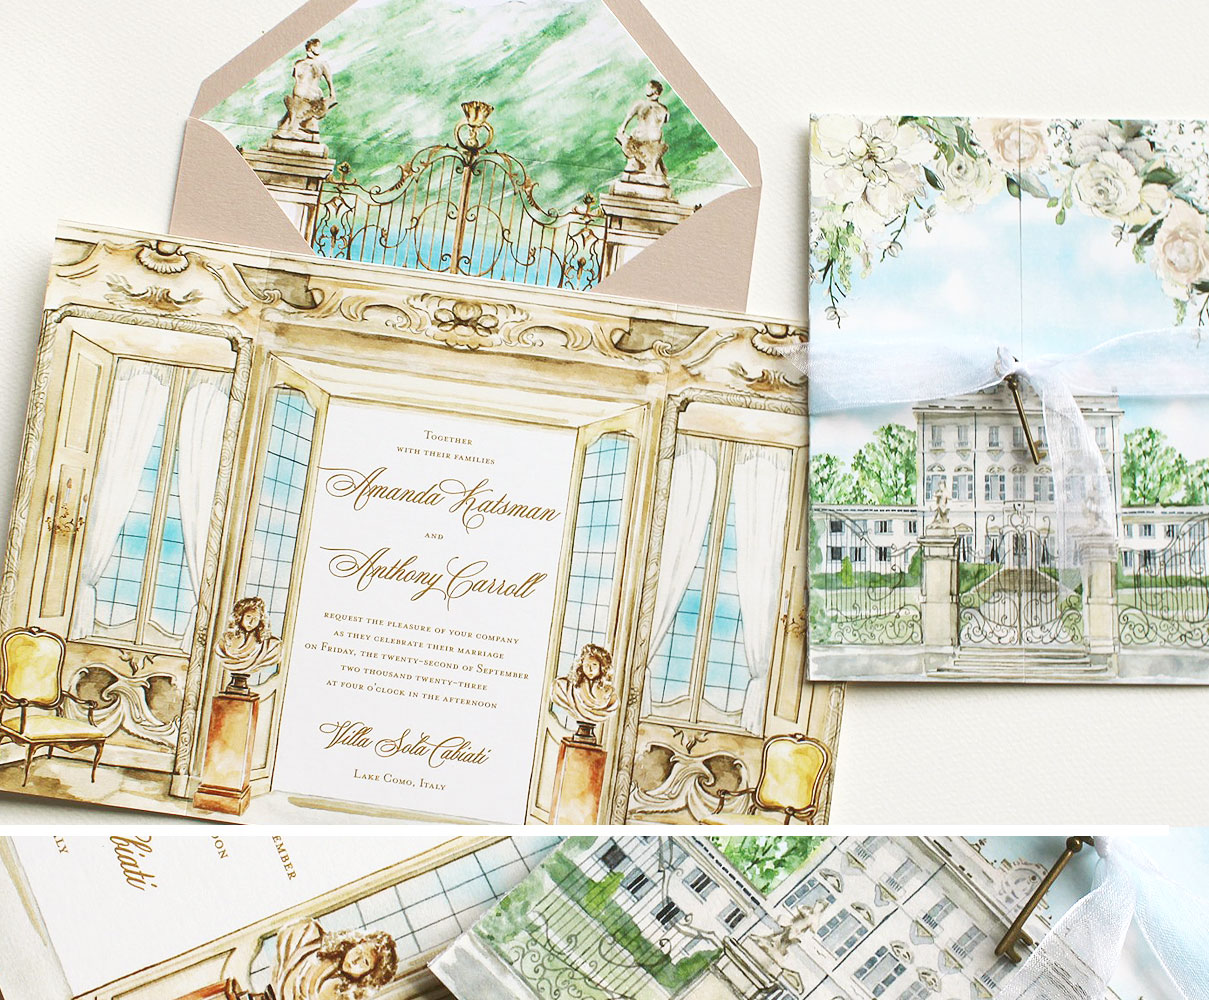 villa-sola-cabiati-watercolor-wedding-invitations